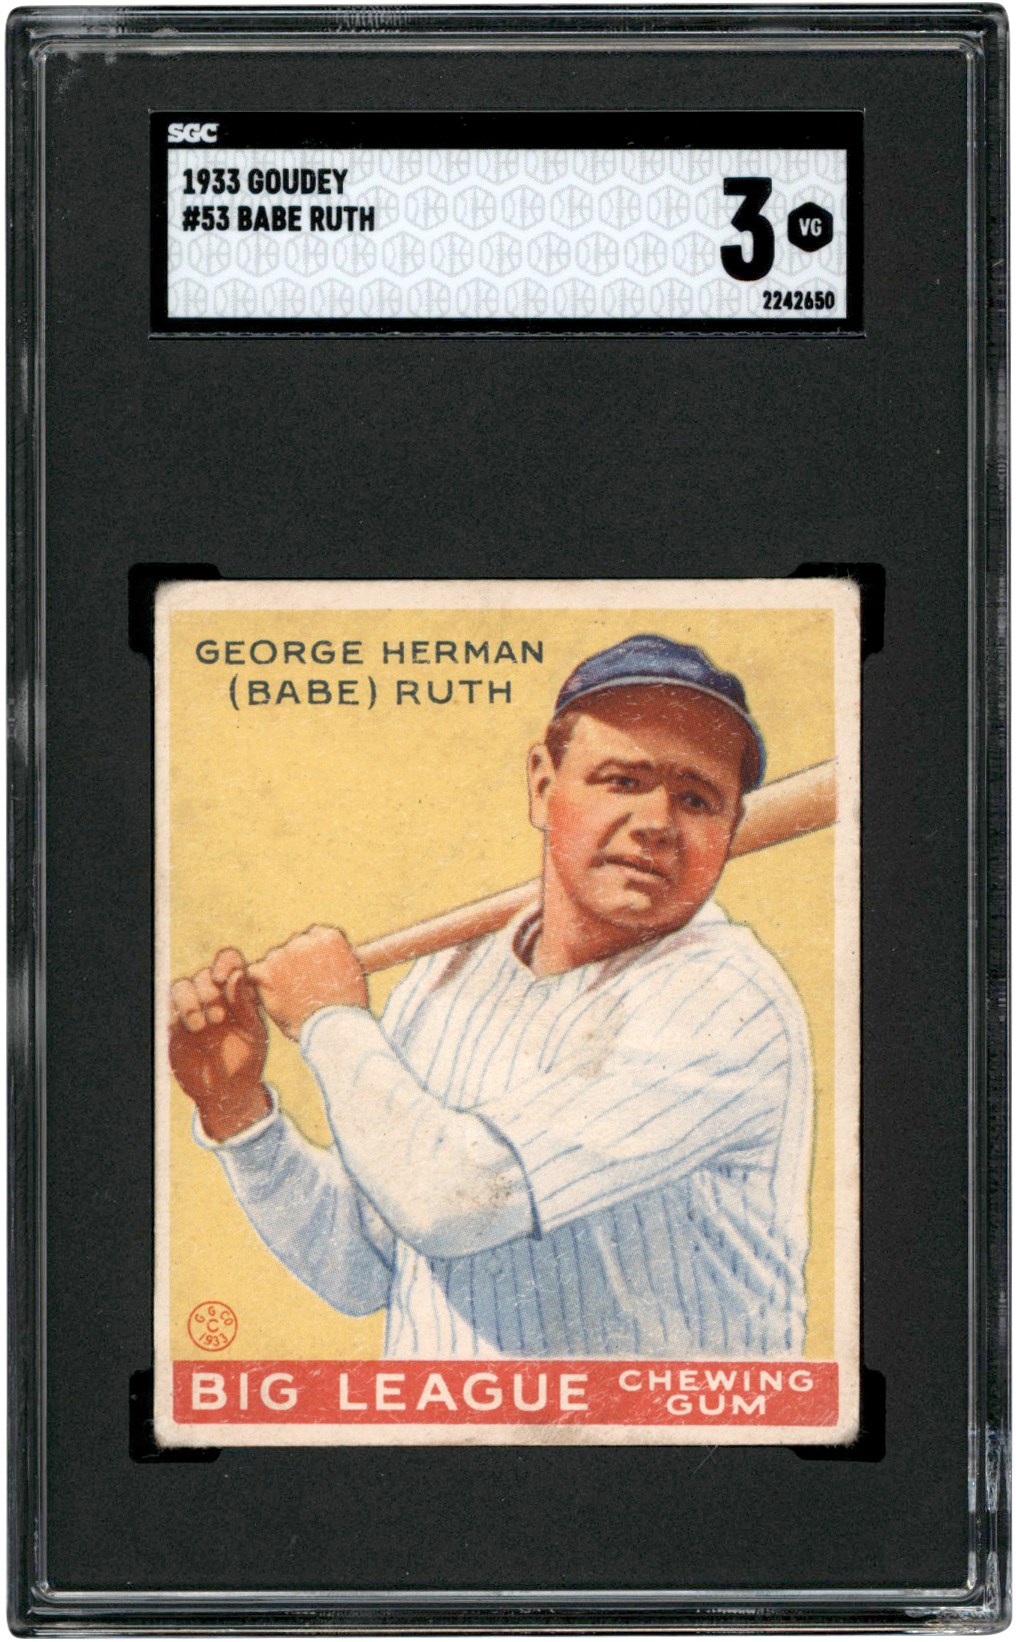 - 33 Goudey Baseball #53 Babe Ruth Card SGC VG 3